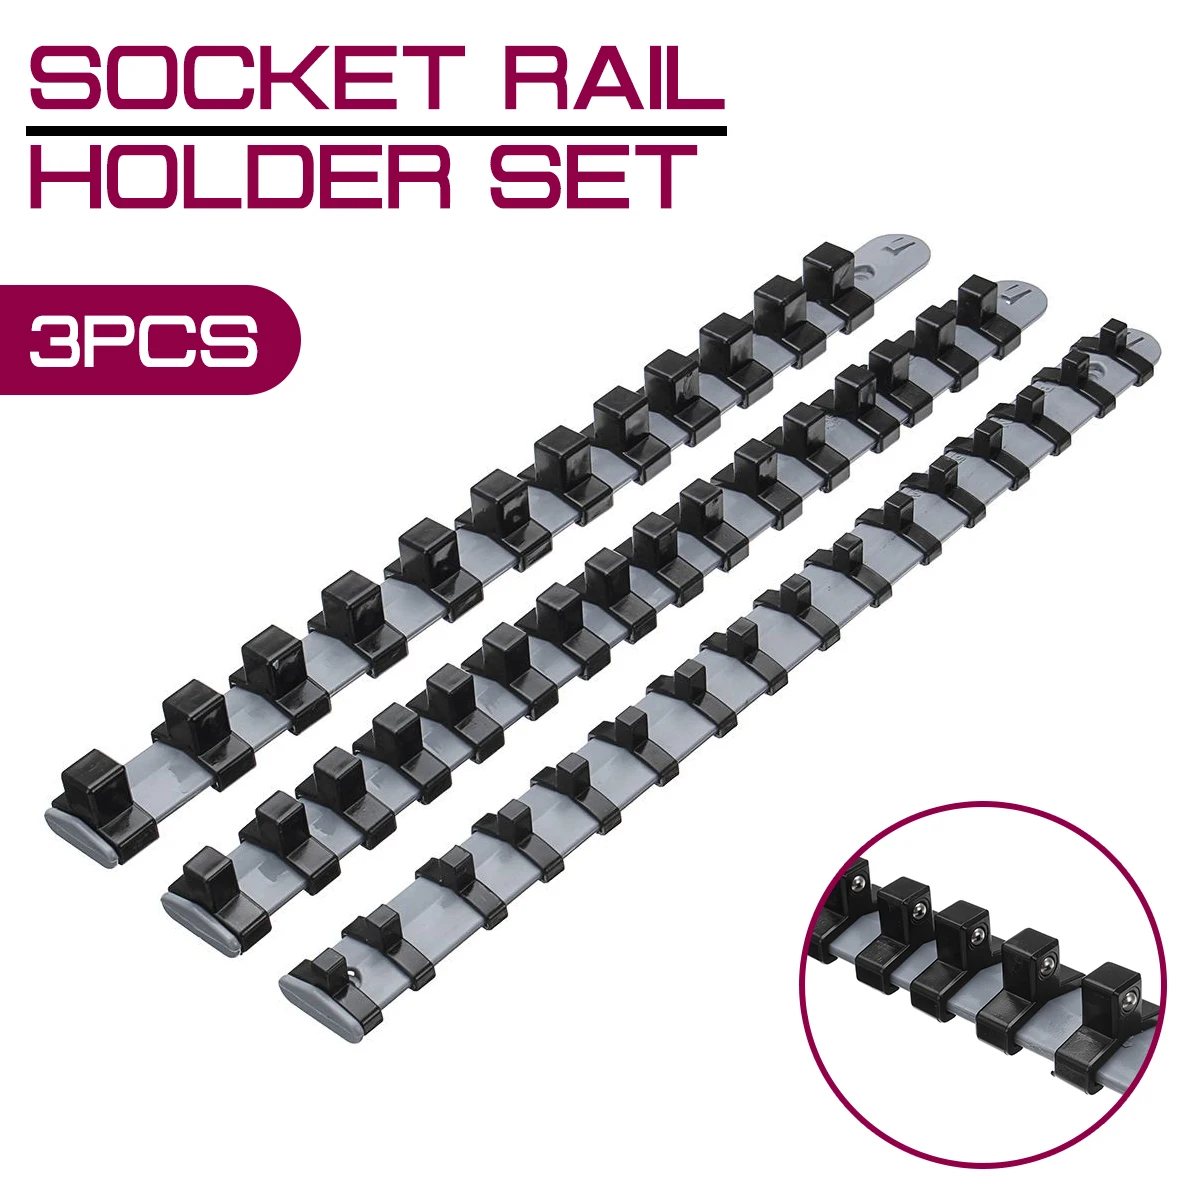 

3PCS/SET 1/4" 3/8" 1/2" Wall Wrench Organizer Socket Rack Storage Drive Rail Tray Holder Shelf Stand 34cm Dropshipping